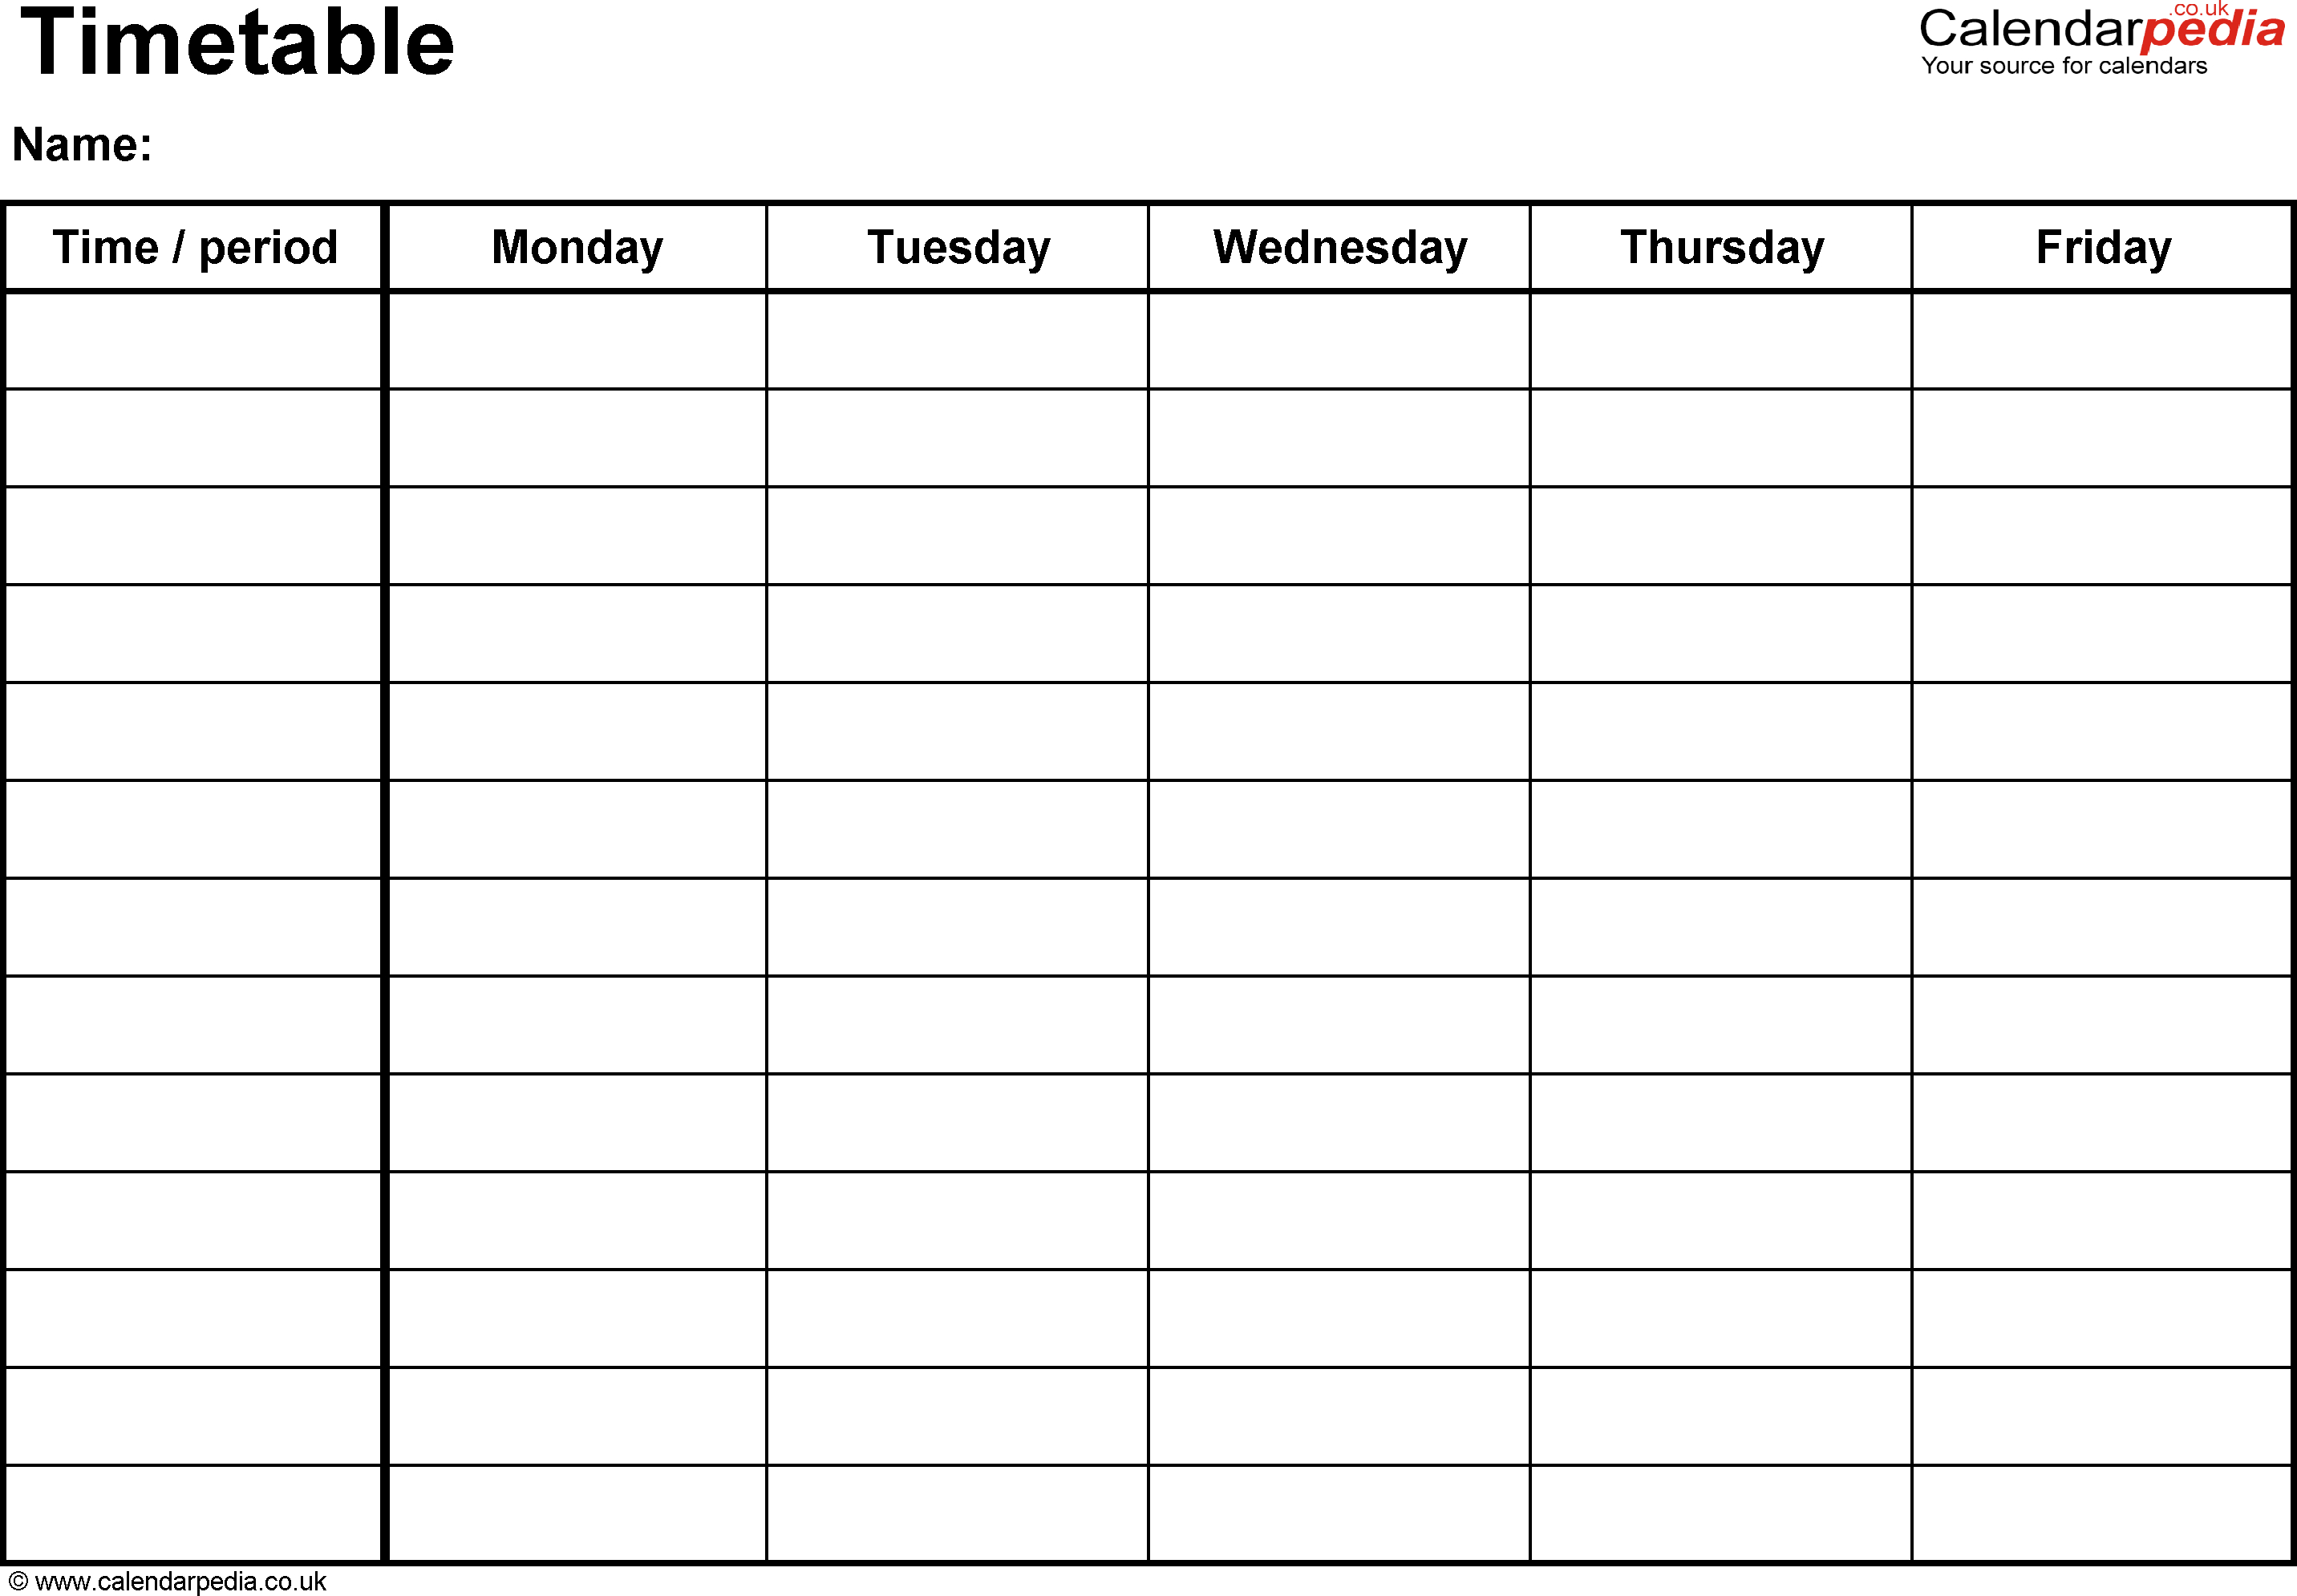 Timetable Templates For Microsoft Word - Free And Printable - Free Printable Class List Template For Teachers